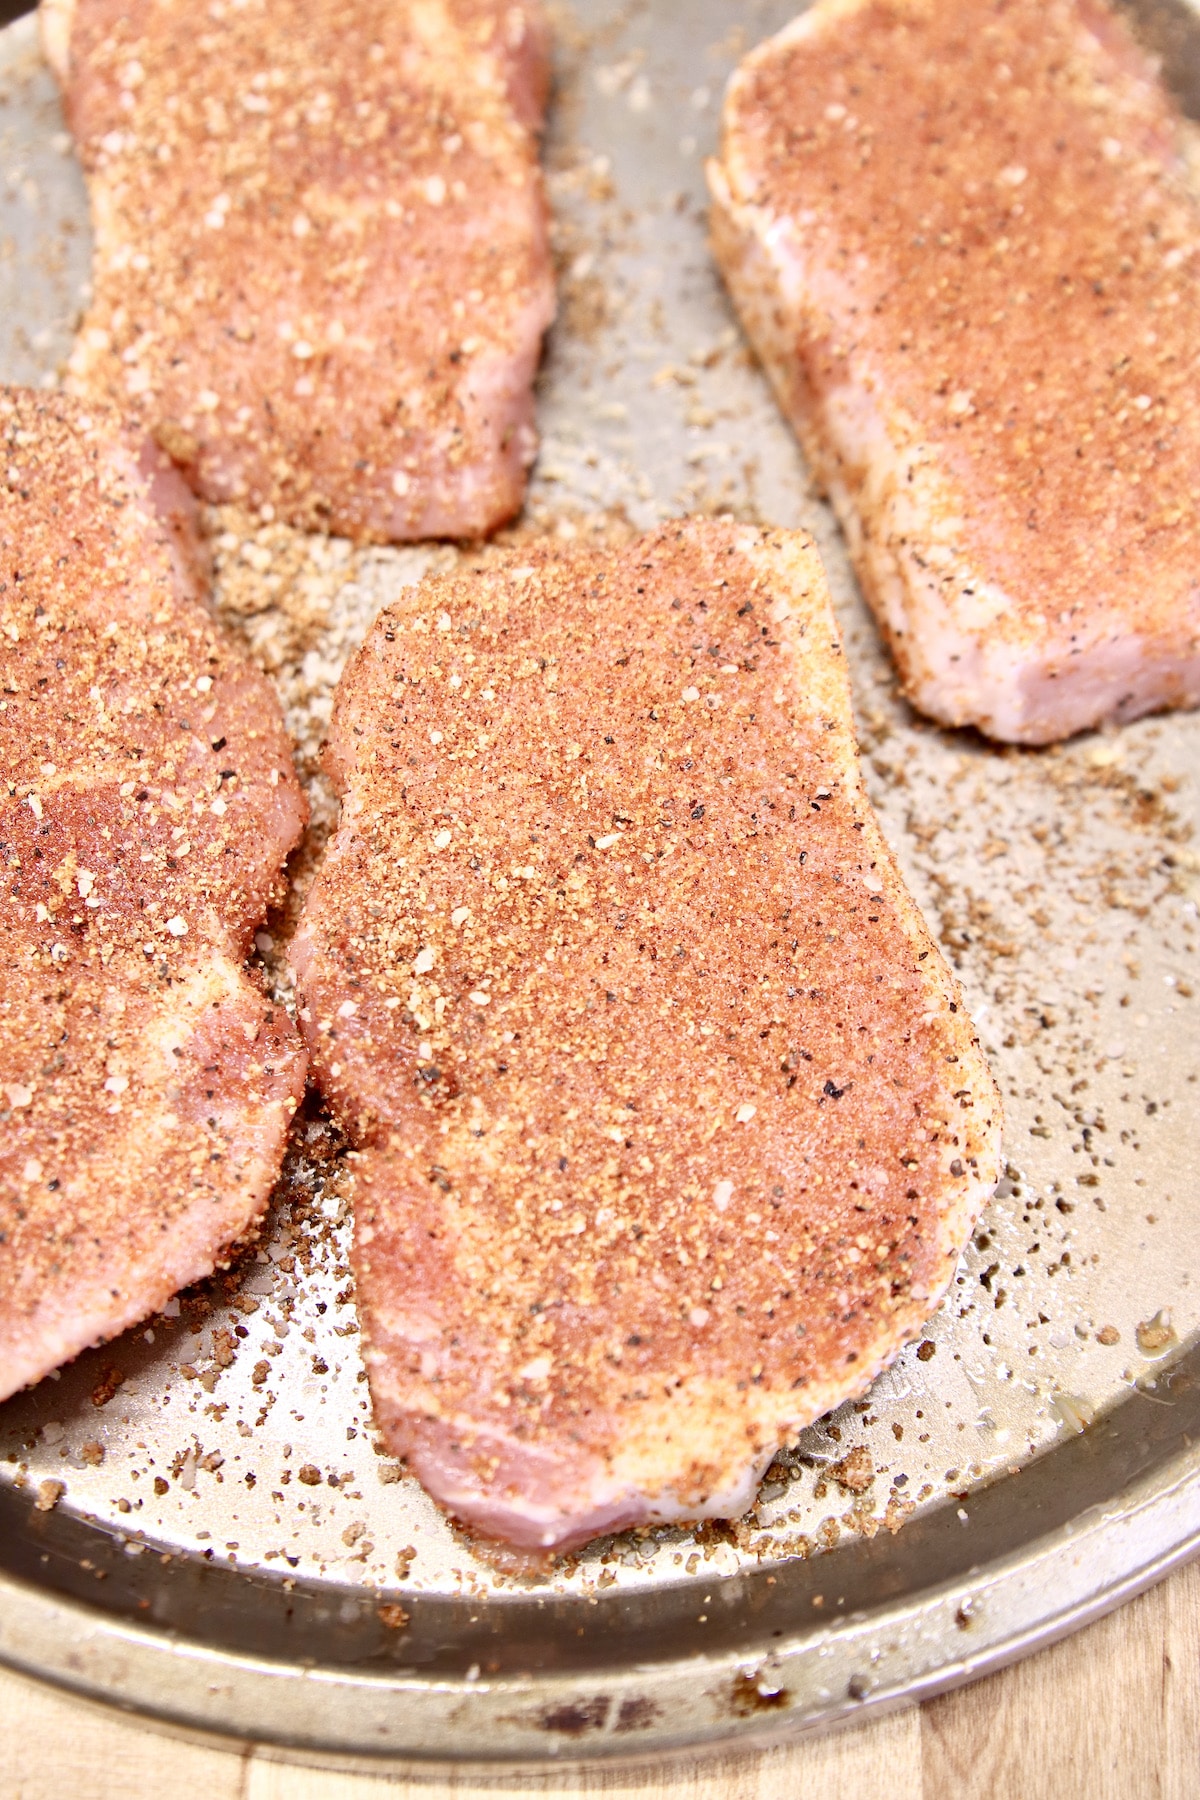 Raw pork chops with dry rub seasoning.